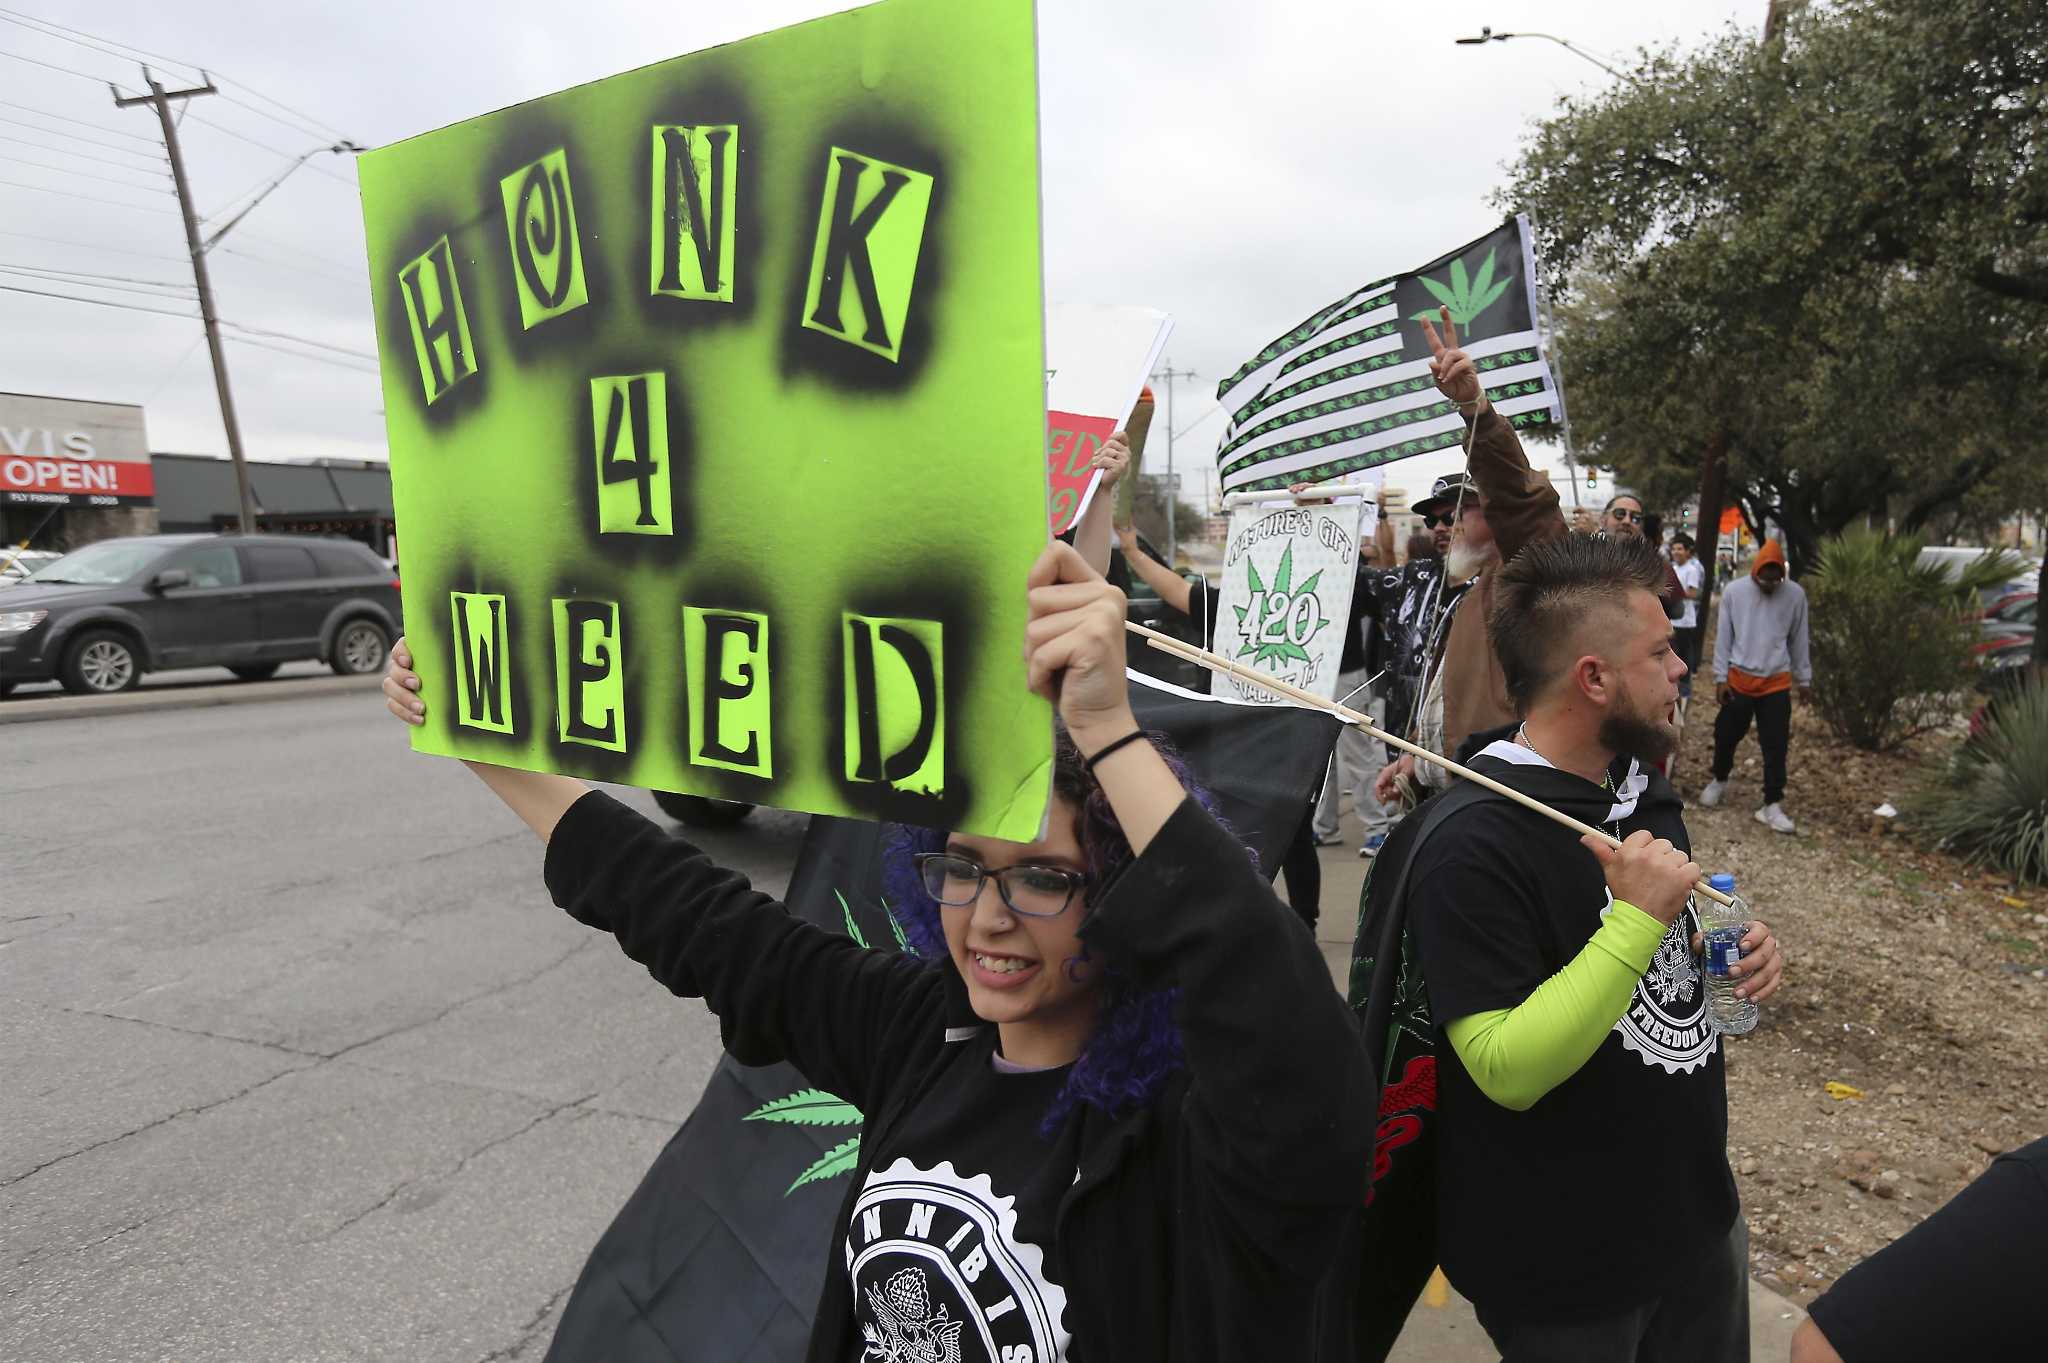 San Antonio activists promote recreational and medical use of marijuana